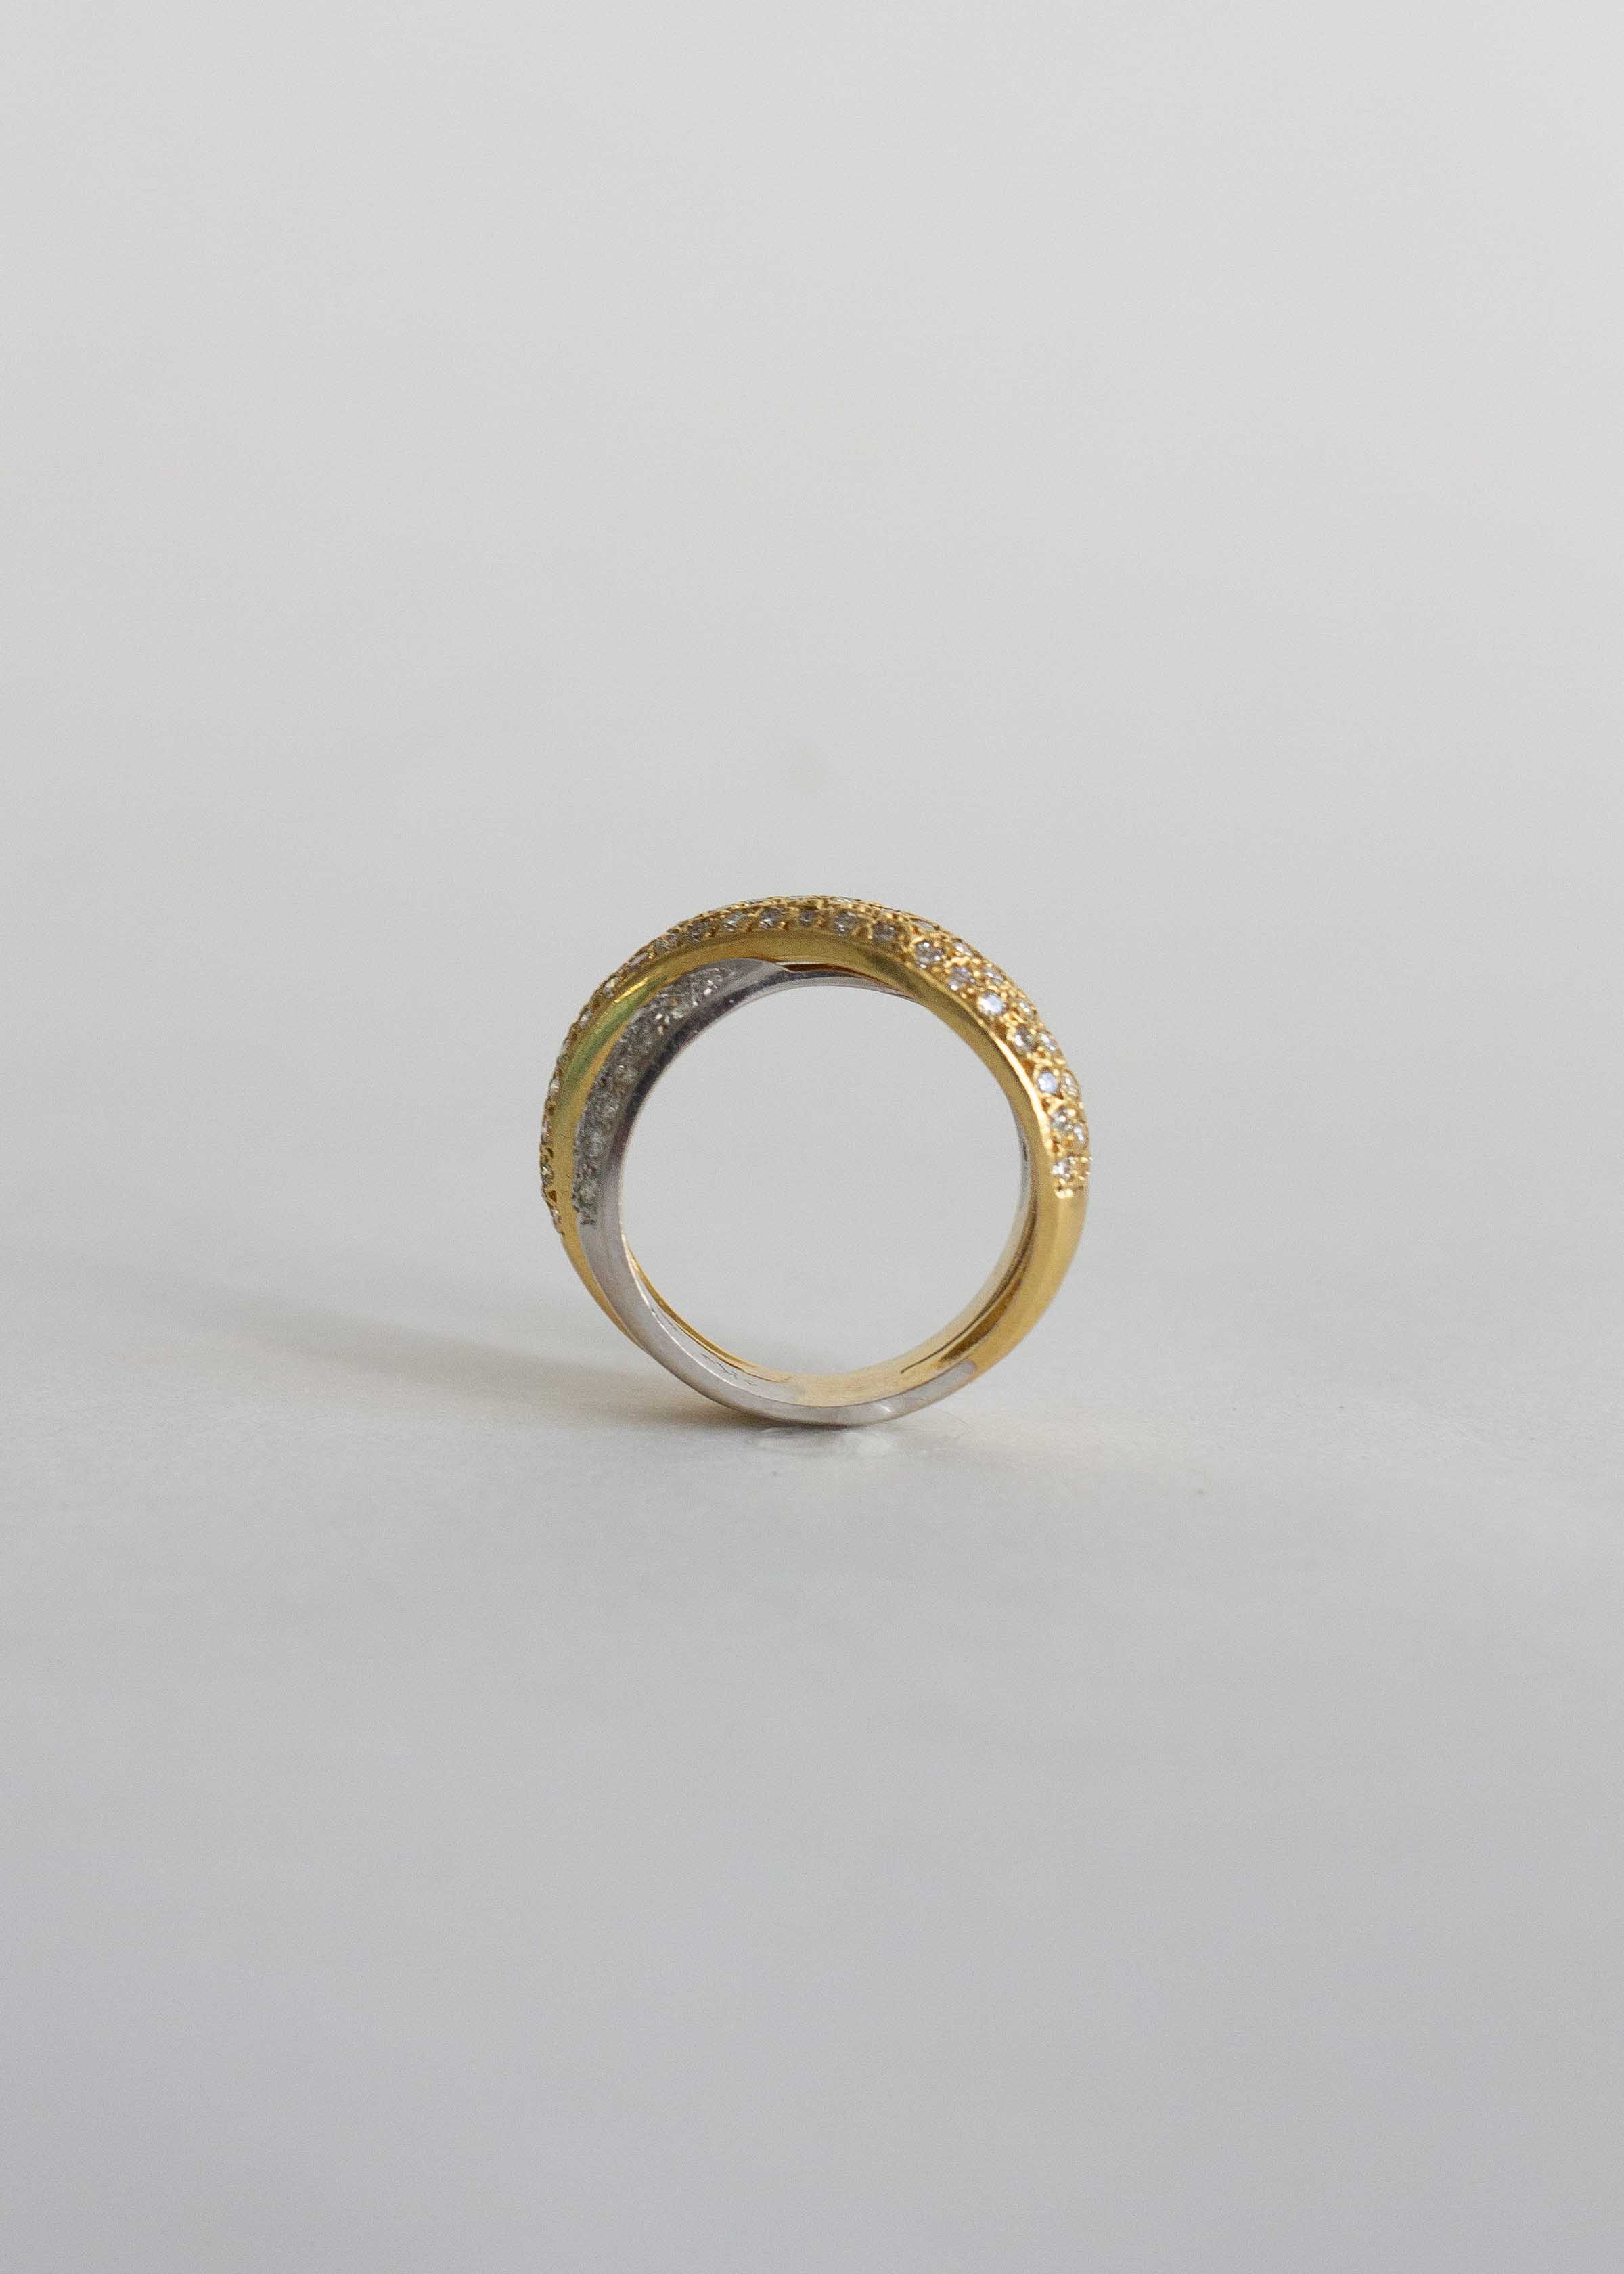 Vintage Two Tone Pavé Diamond Ring